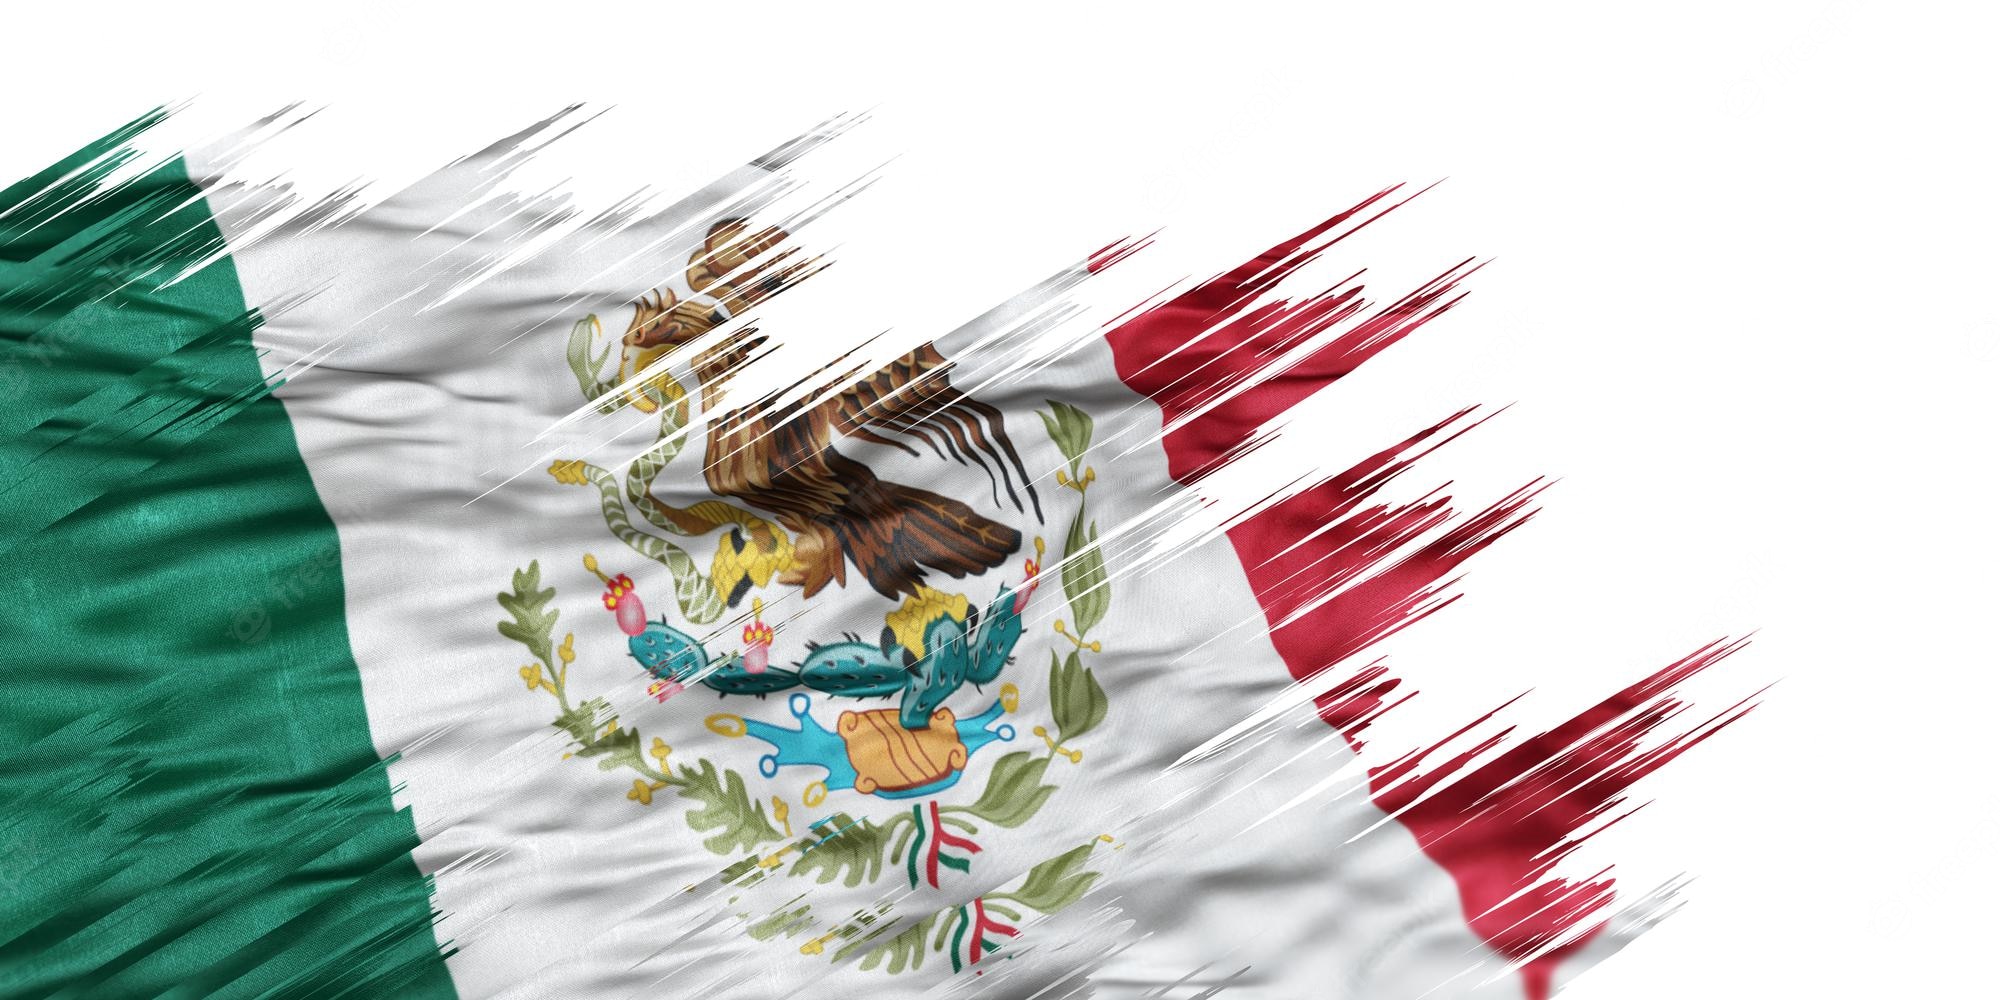 Mexico Flag Map Image. Free Vectors, & PSD